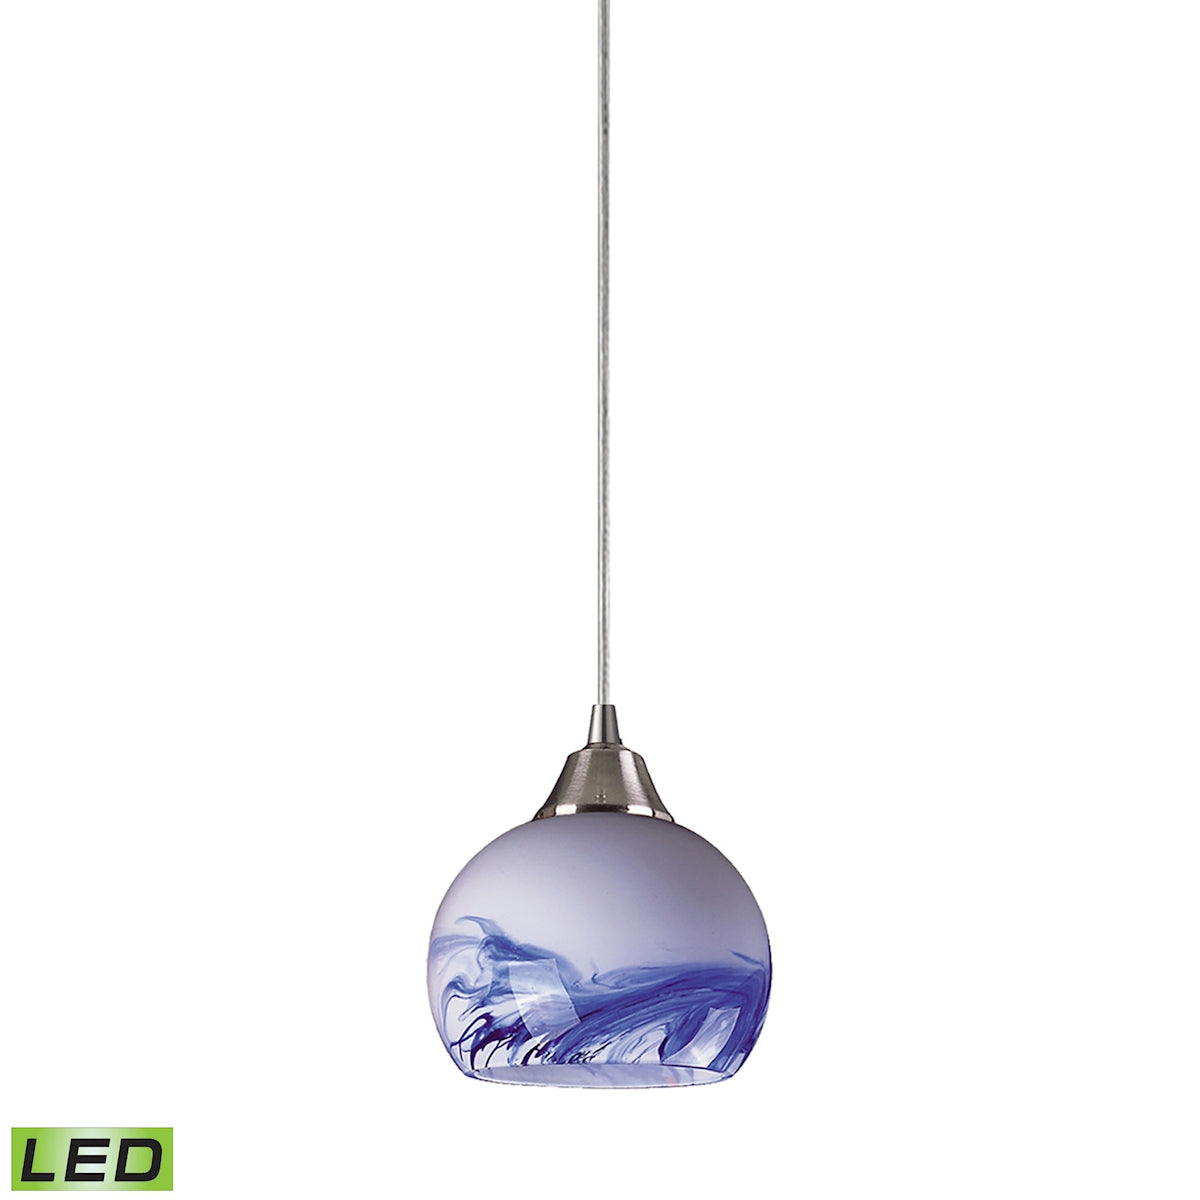 ELK Lighting 101-1MT-LED Mela 1-Light Mini Pendant in Satin Nickel with Hand-blown Mountain Glass - Includes LED Bulb